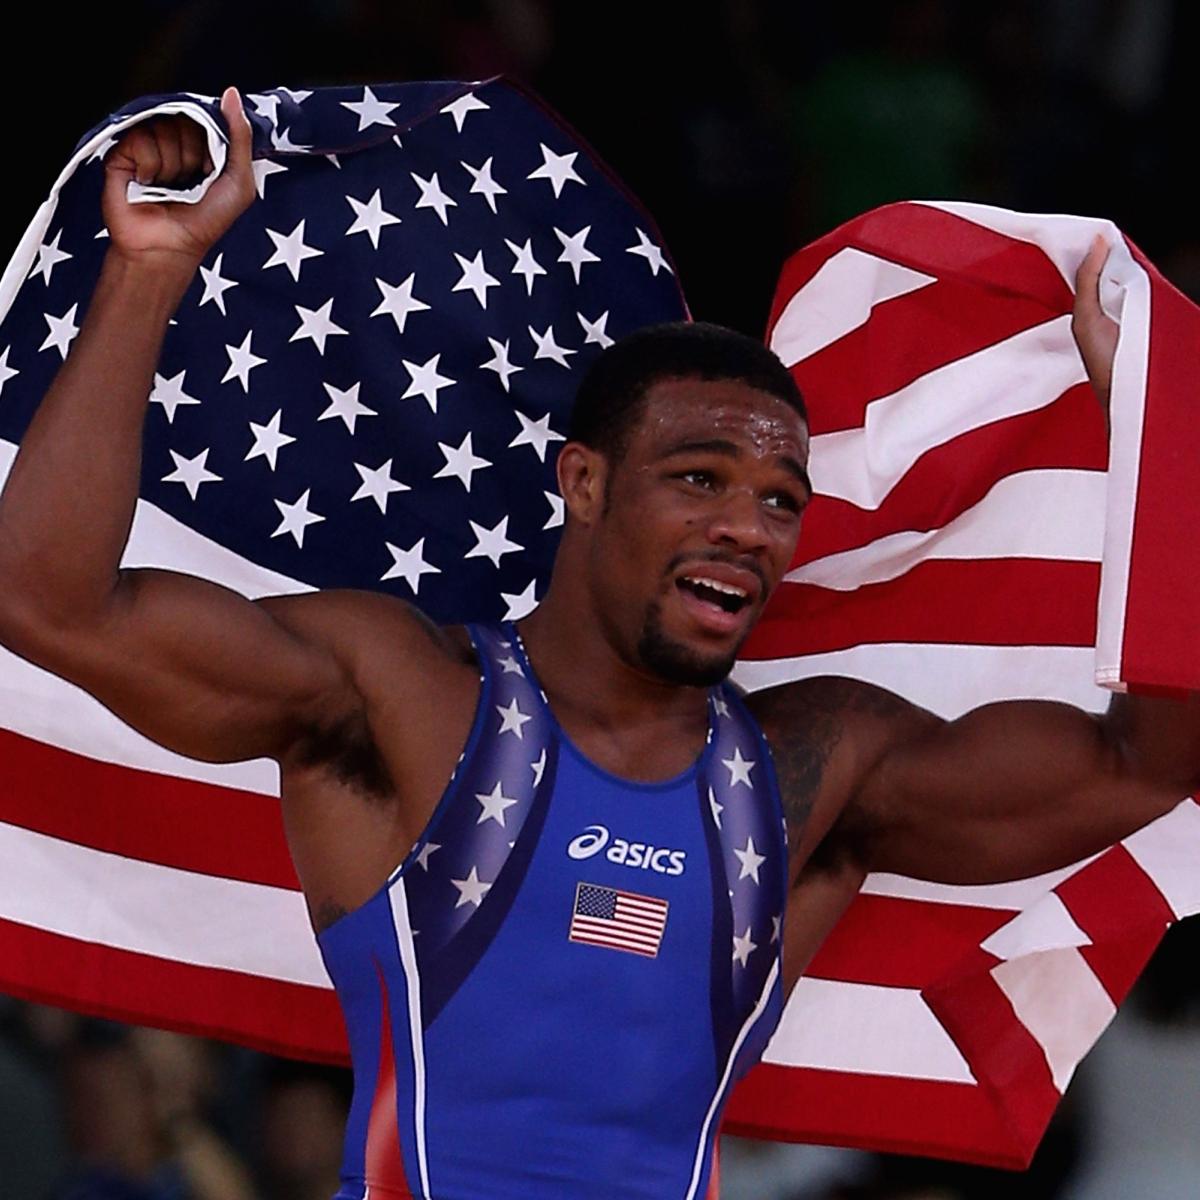 Jordan Burroughs Will Not Bring Olympic Gold MedalWinning Wrestling to